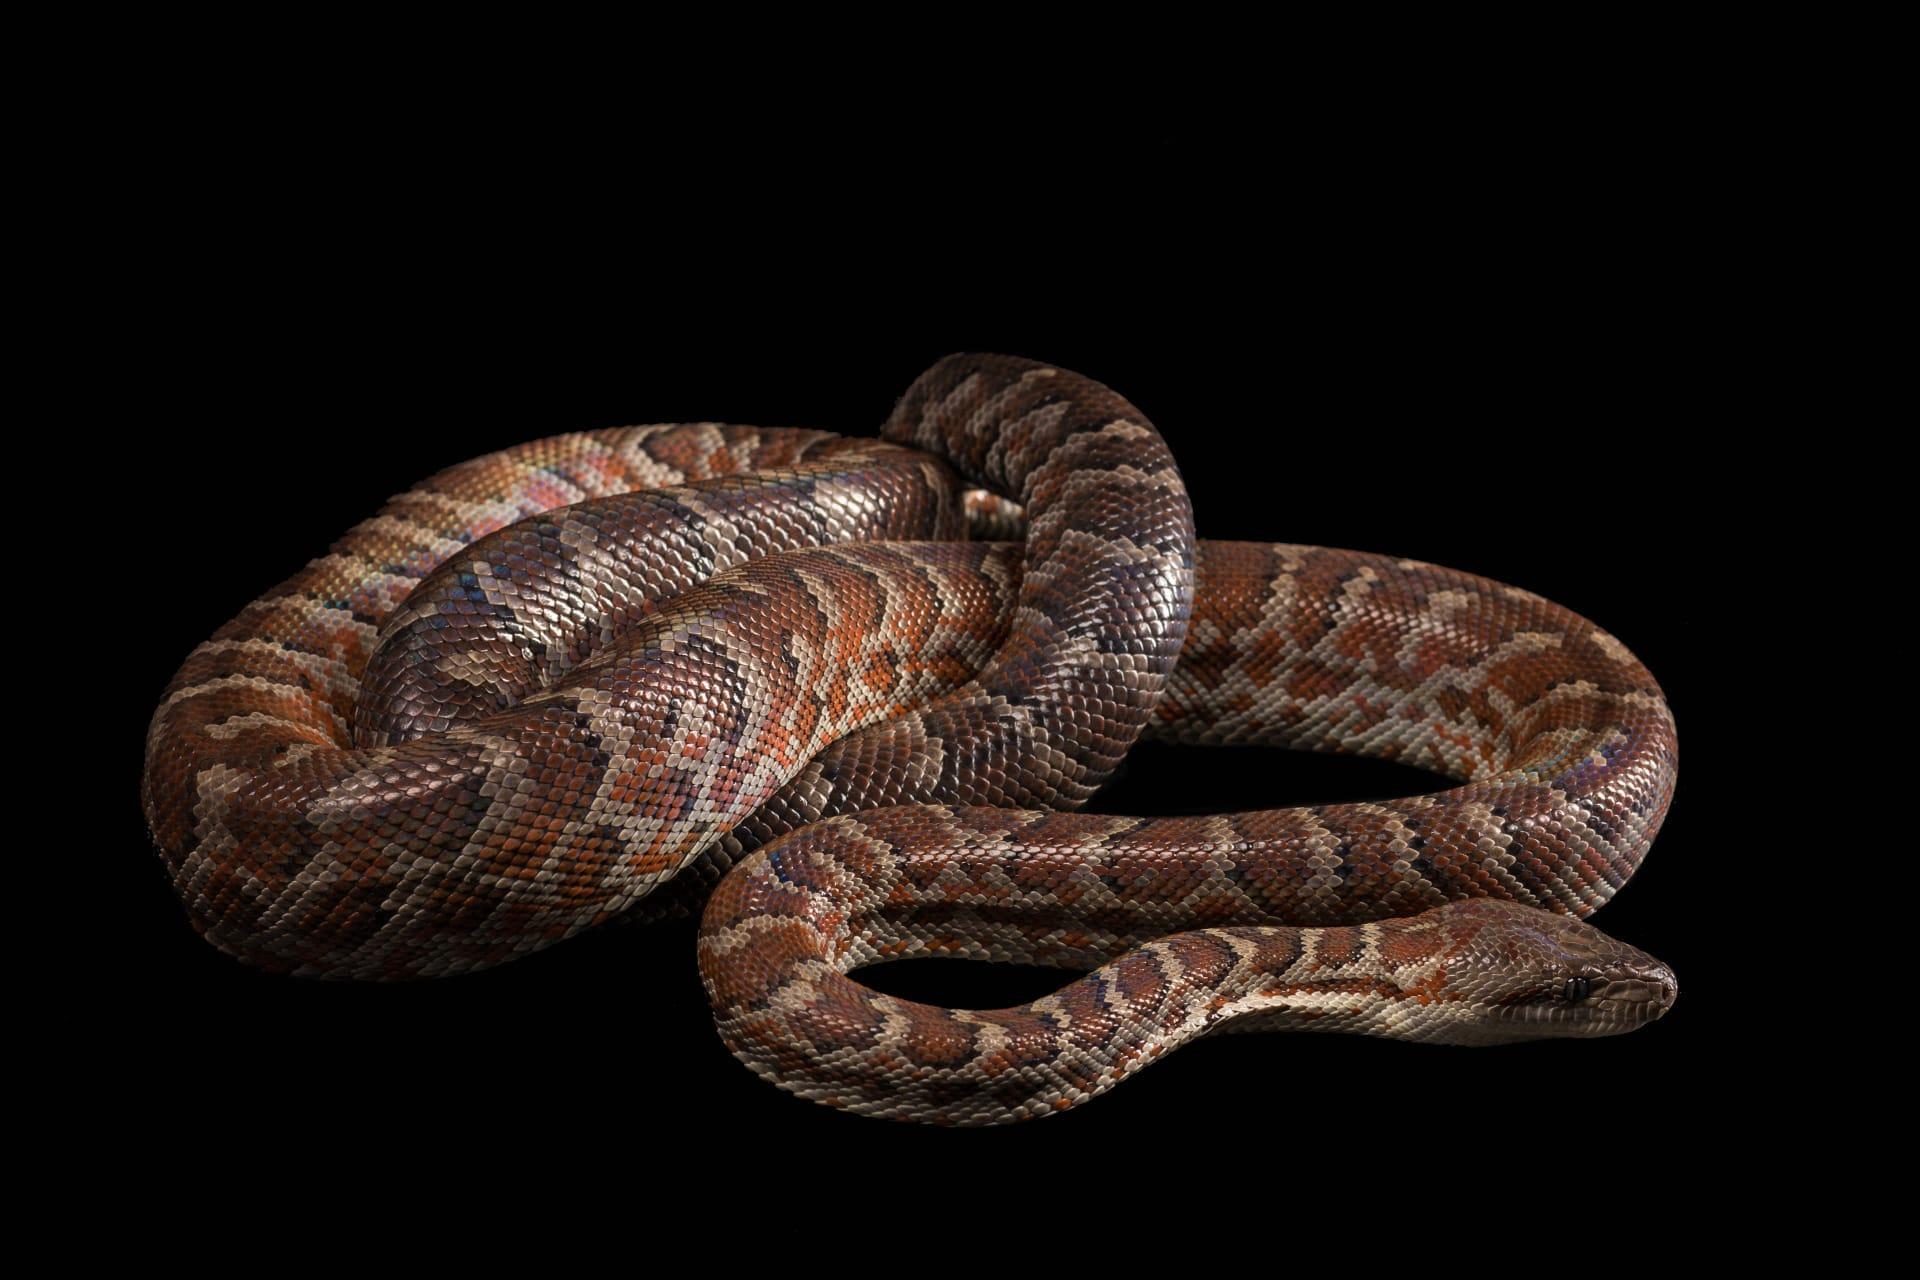 Anaconda snake pictures